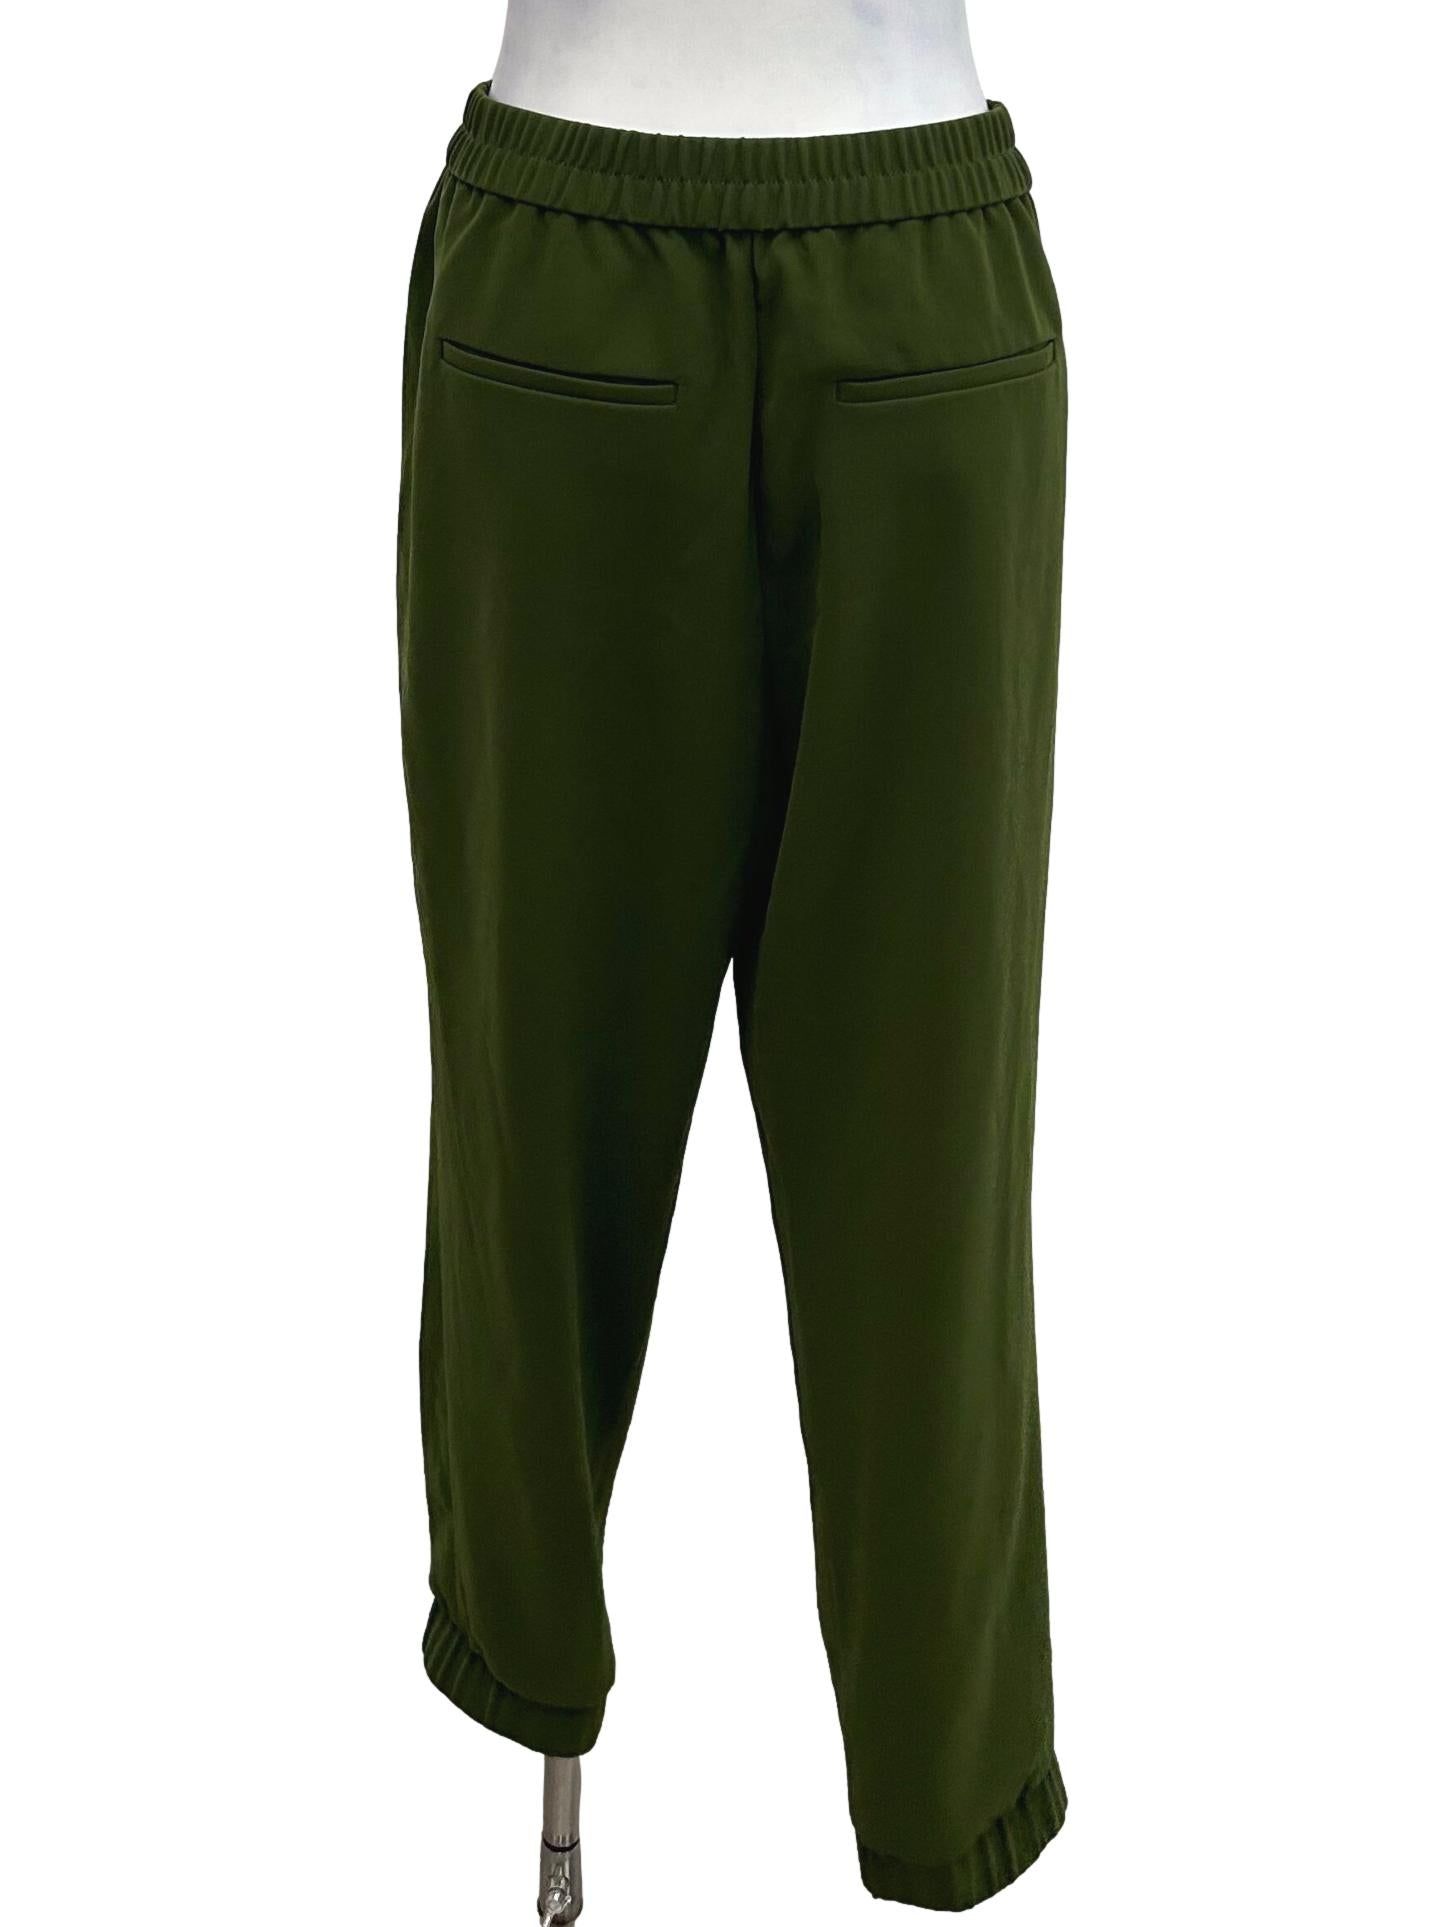 J.Crew Olive Green Elasticated Pants, Women's Fashion, Bottoms